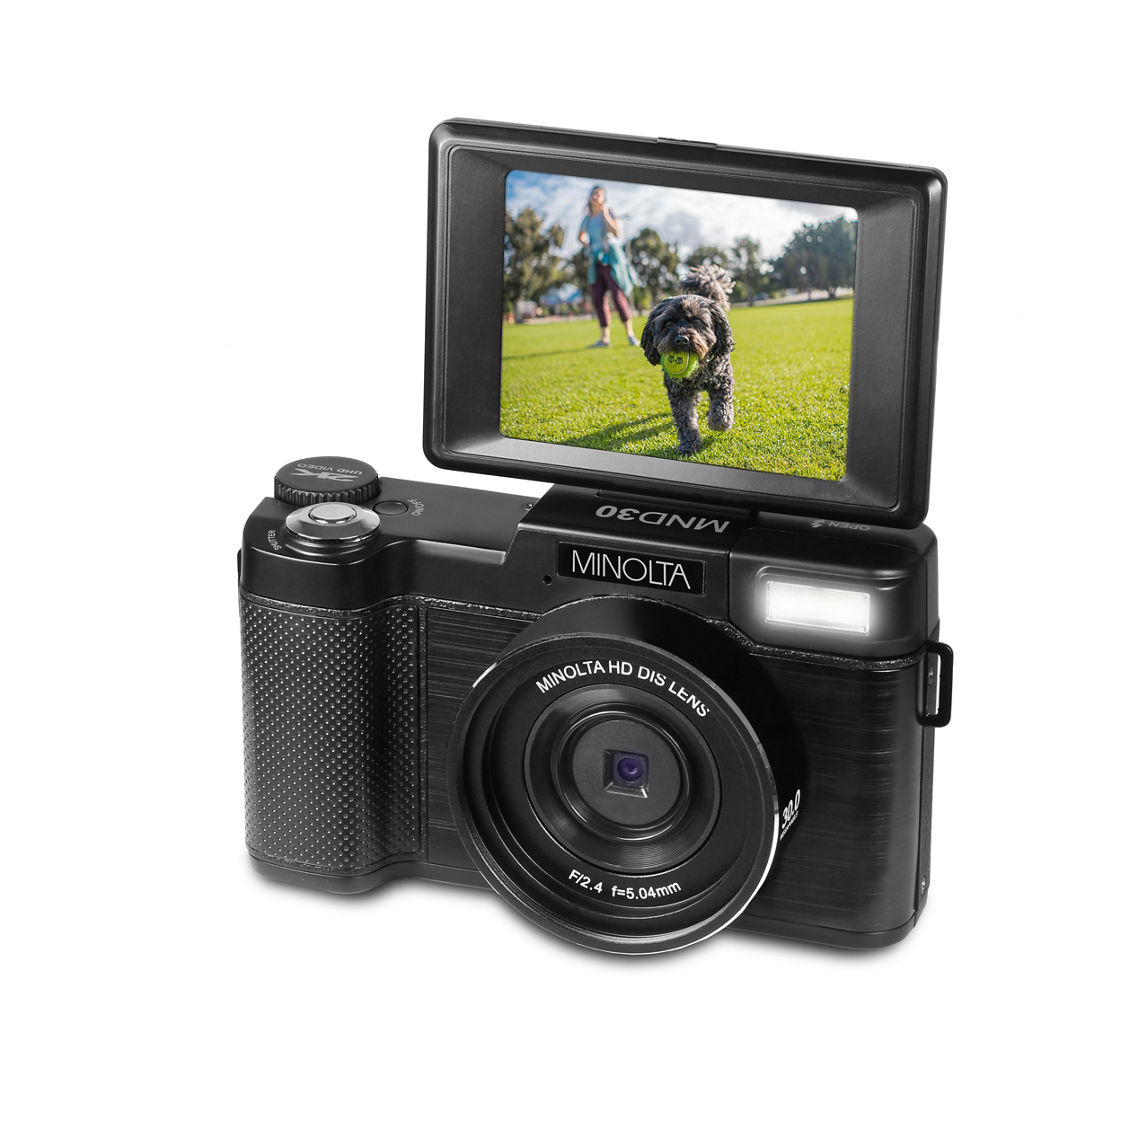 Minolta MND30 30 Mega Pixels Digital Camera with Flip-up Screen - Image 2 of 4